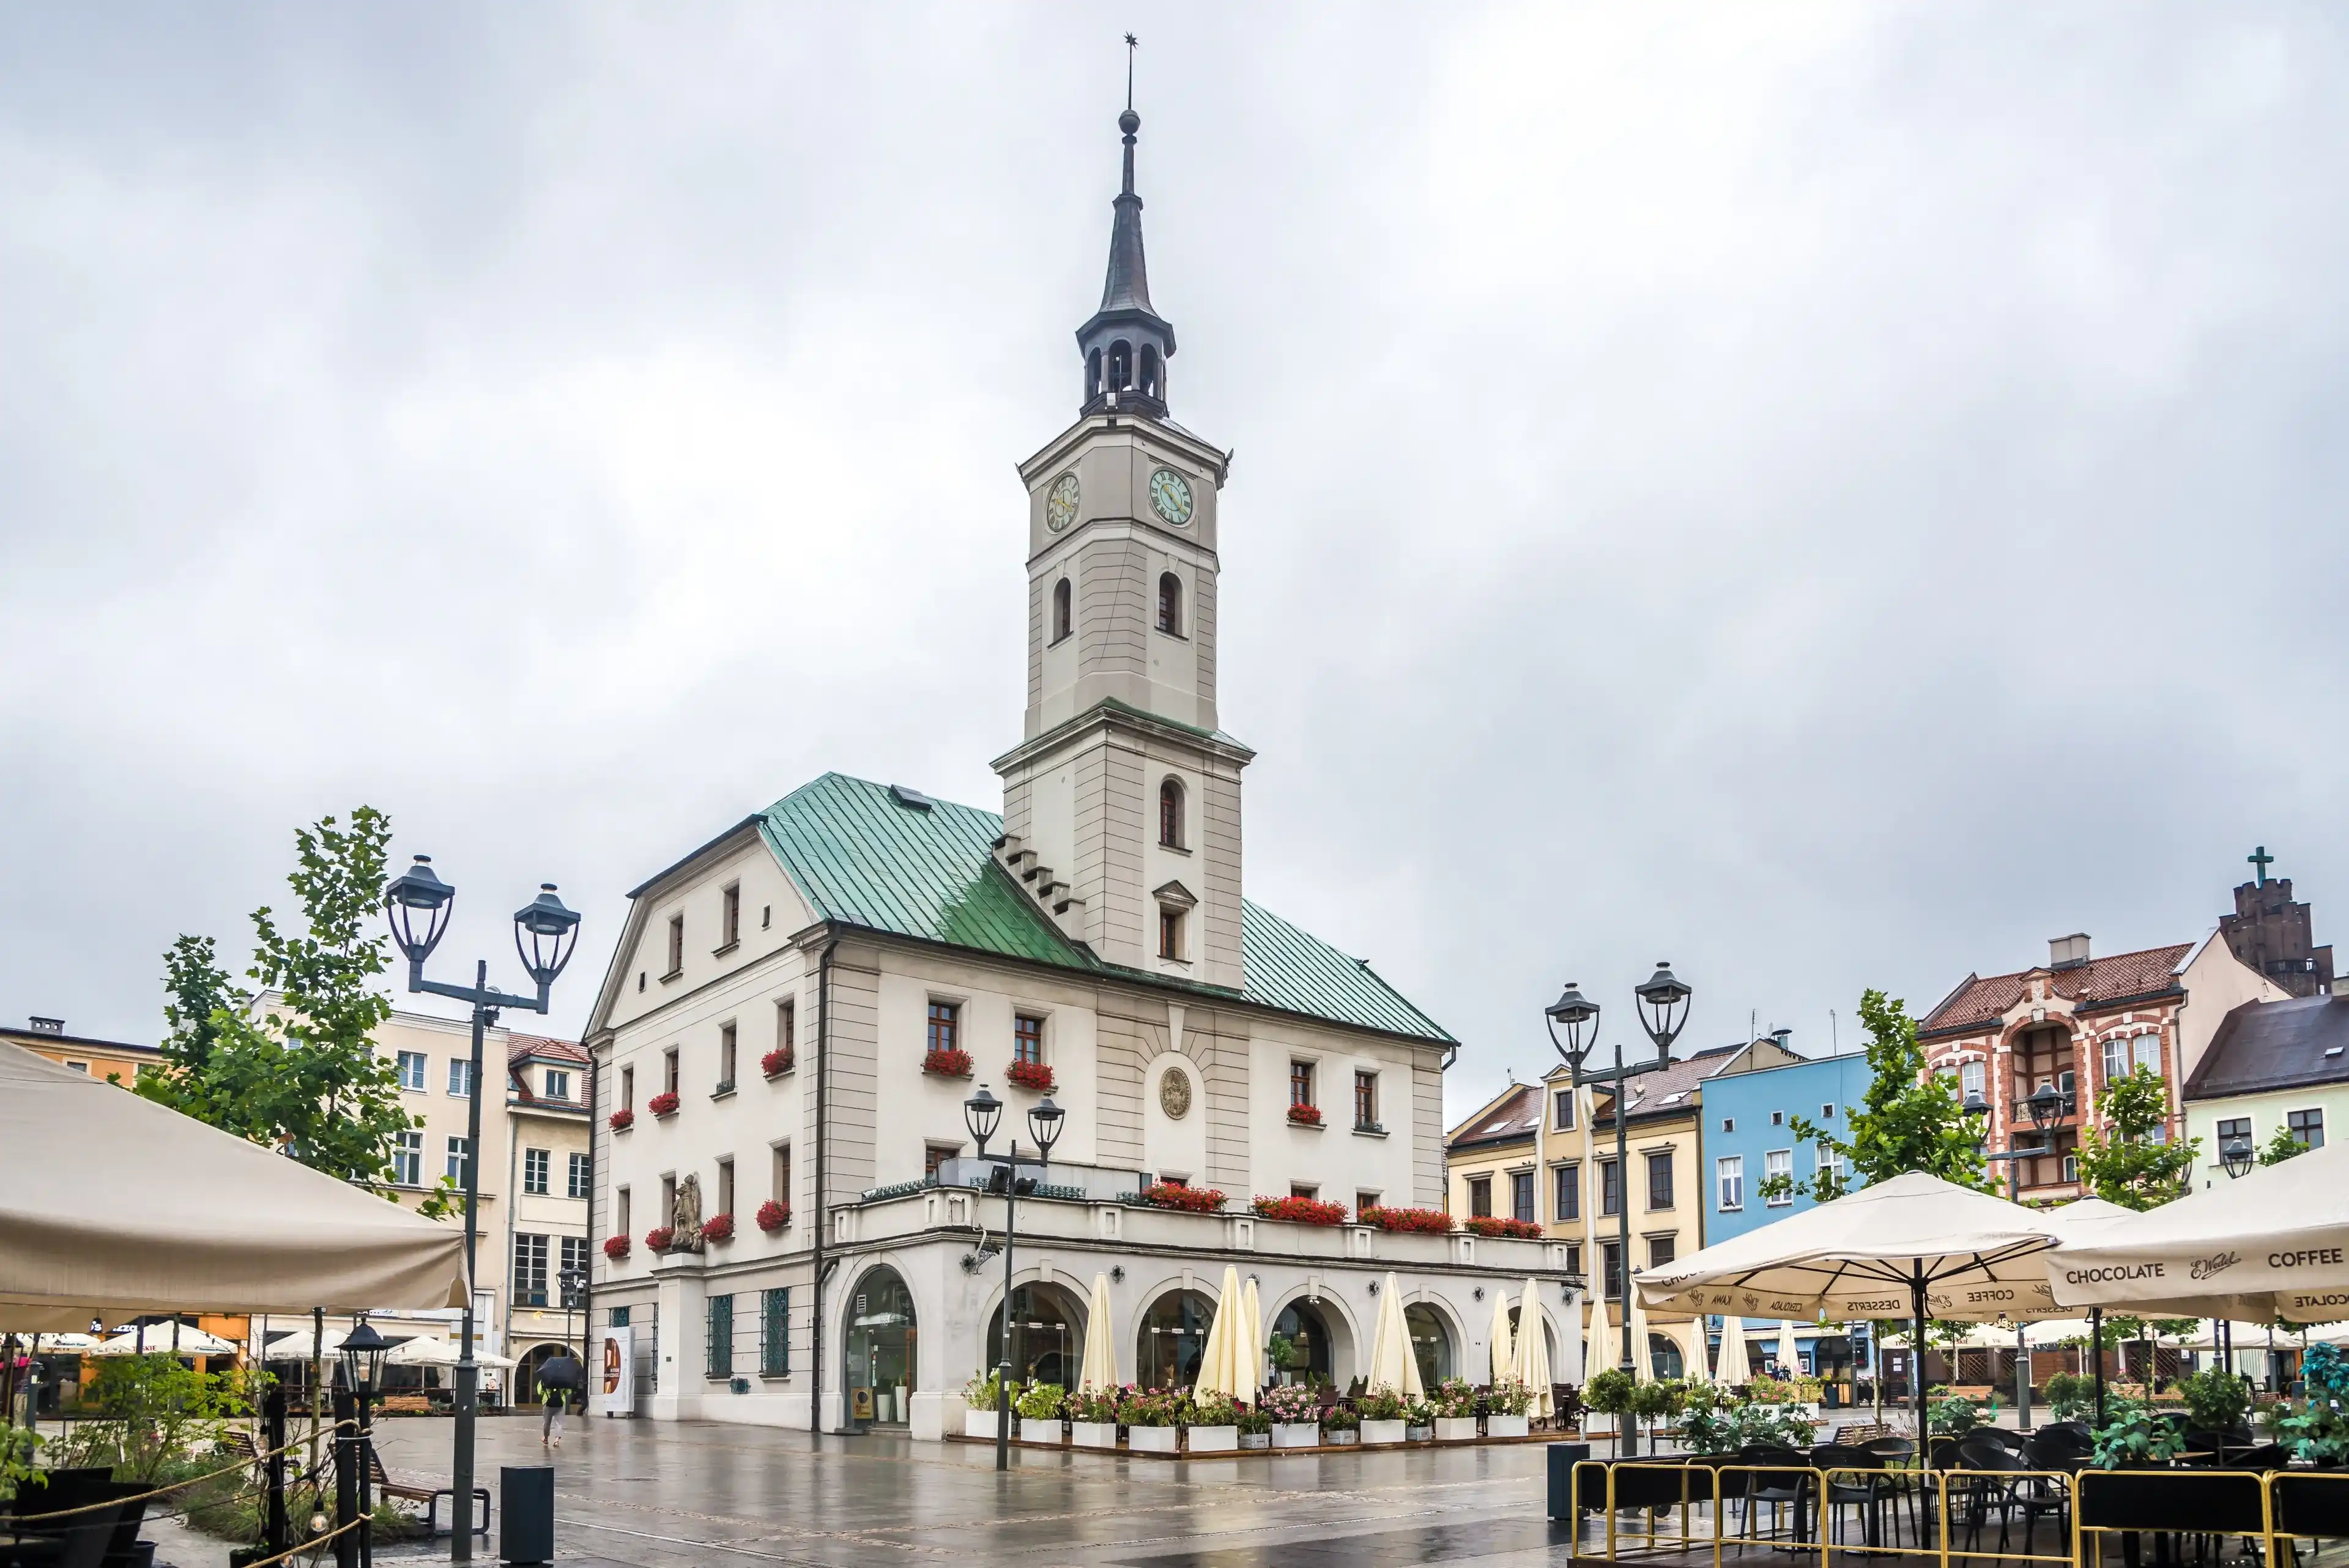 Best Gliwice hotels. Cheap hotels in Gliwice, Poland